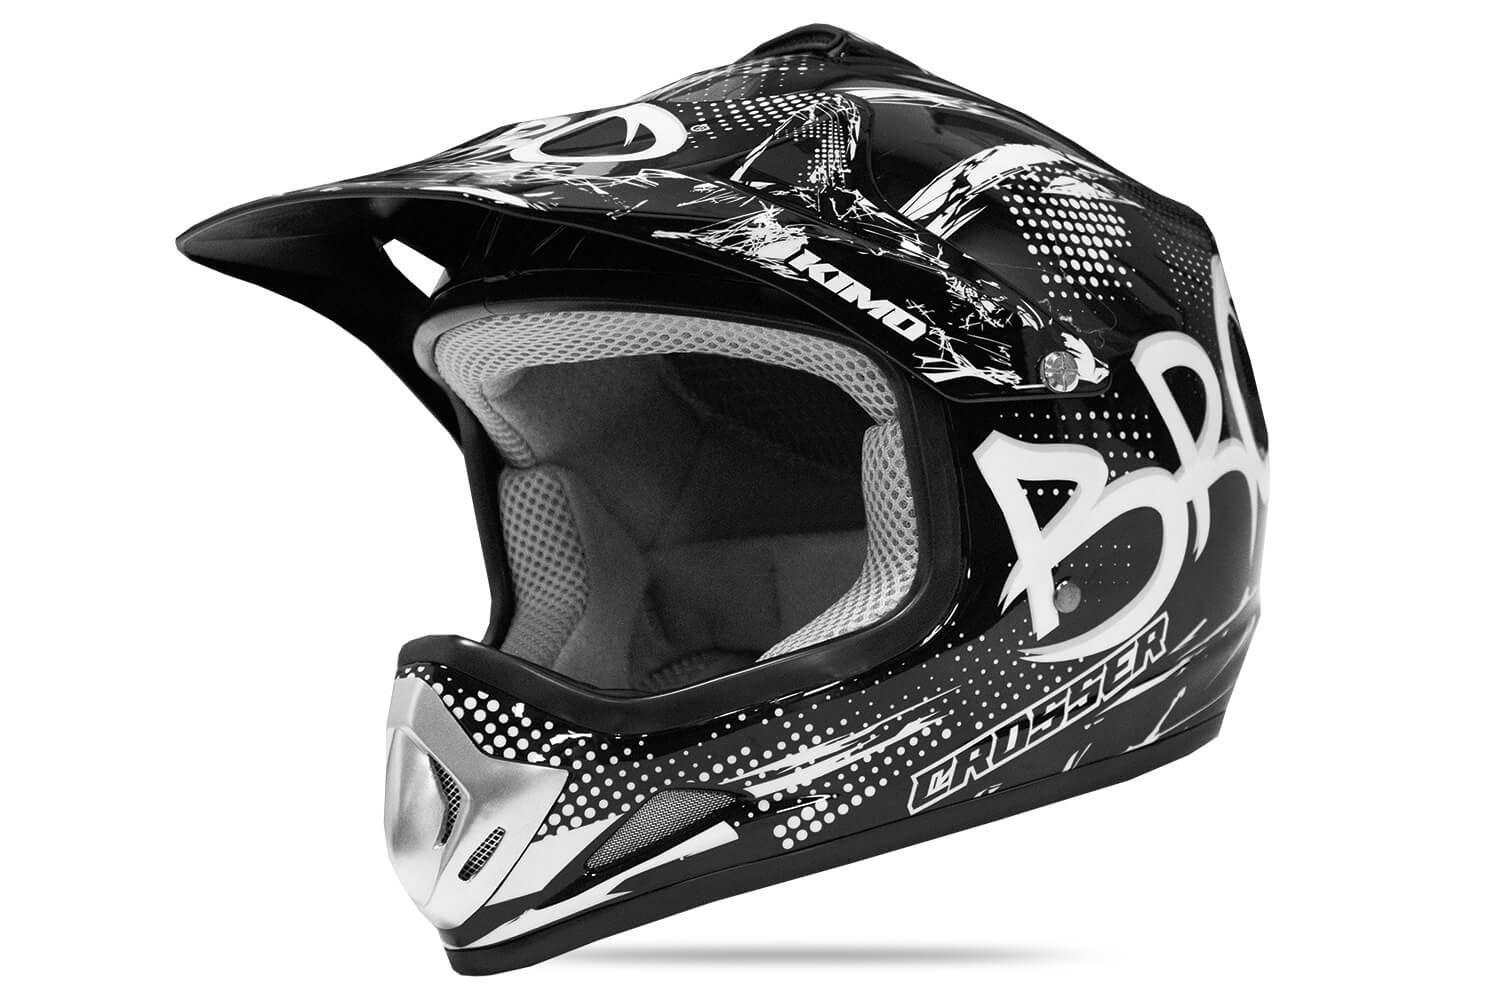 https://minibikes.store/image/catalog/produkty2/kimobro/Bro-motocross-helmet-for-children-and-teenagers-black%20(1).jpg